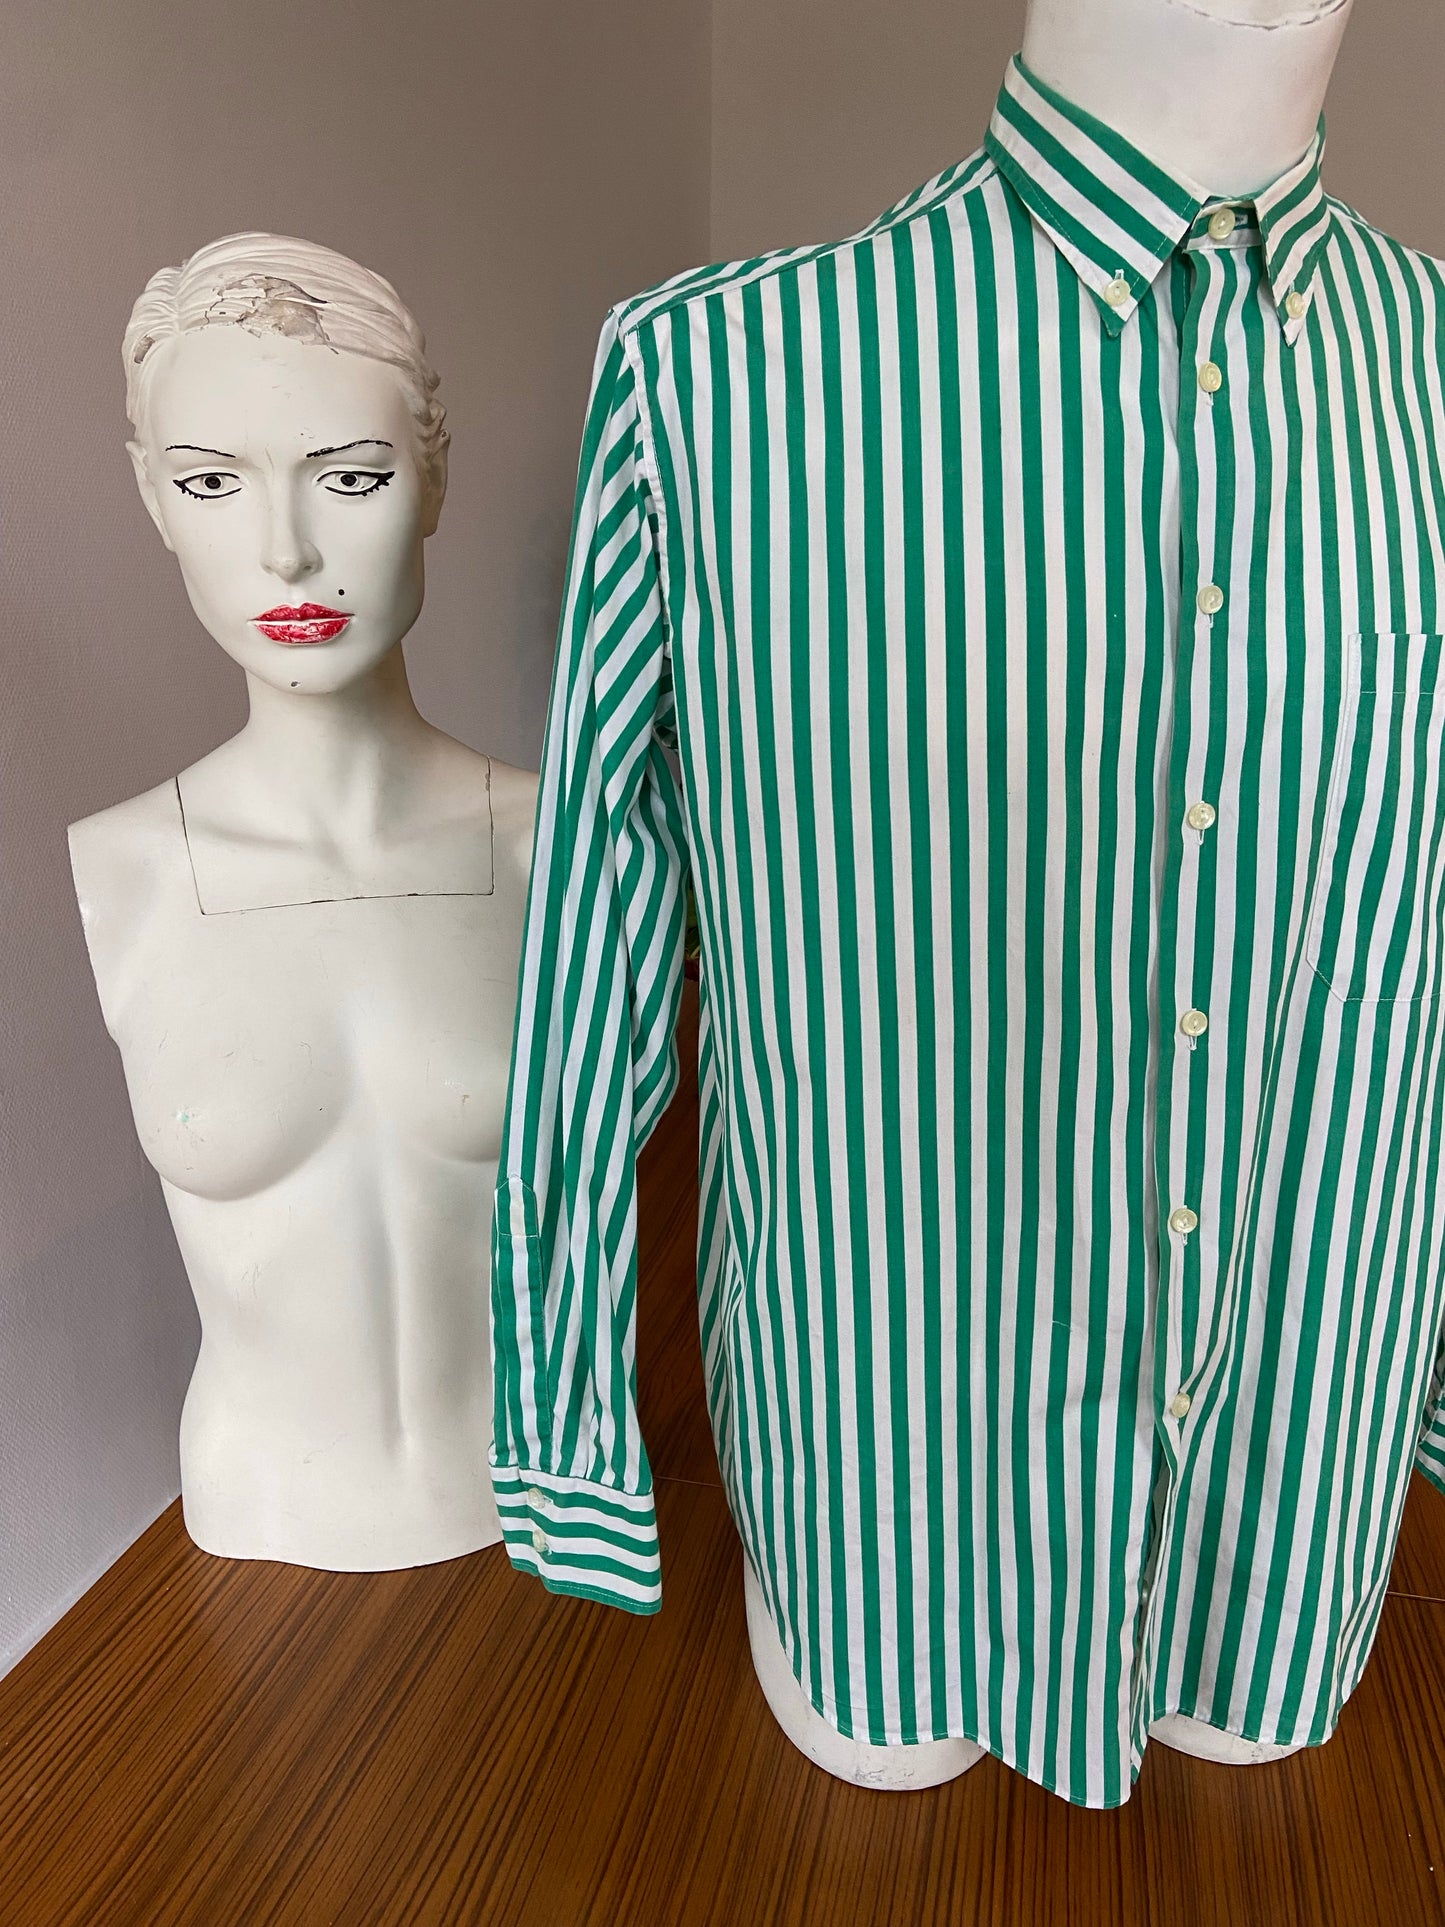 Green striped shirt